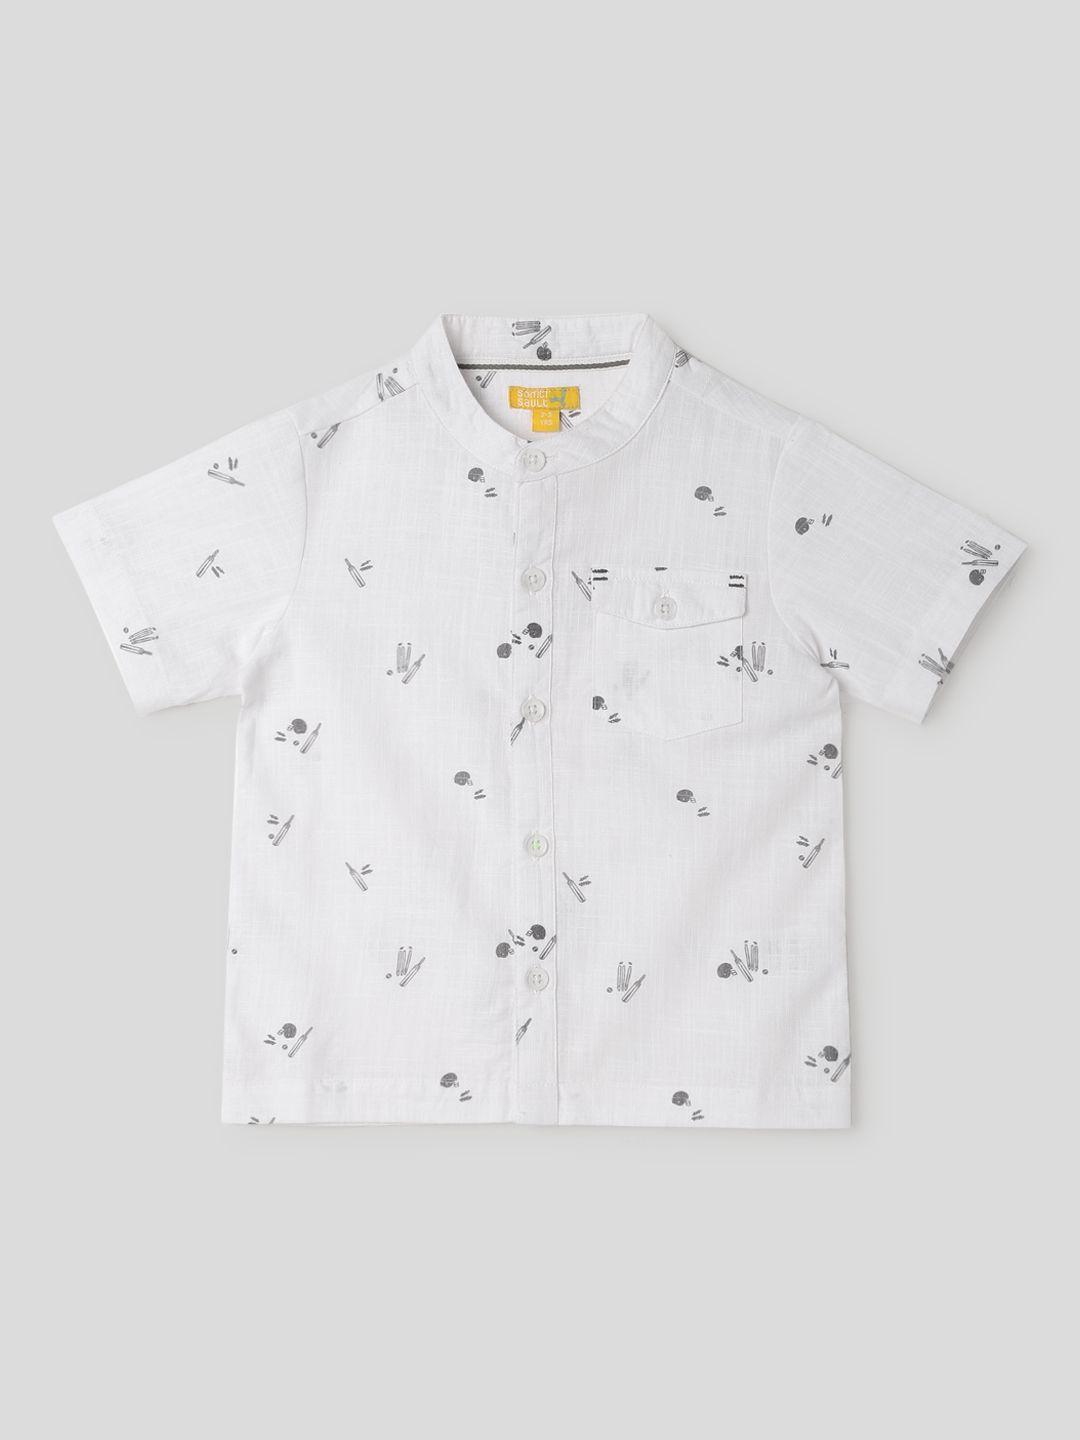 somersault boys conversational printed pure cotton casual shirt